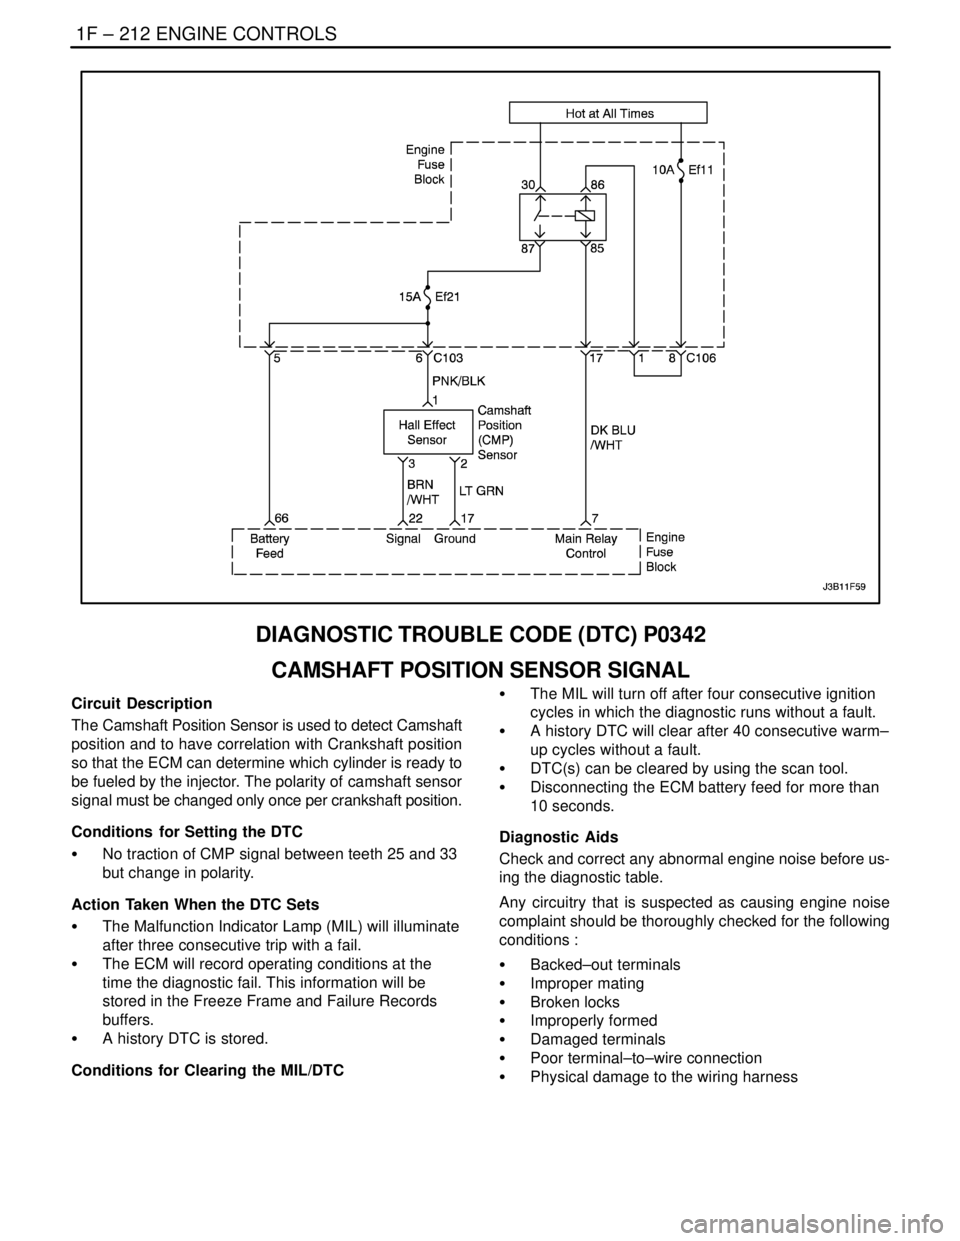 DAEWOO LACETTI 2004  Service Repair Manual 1F – 212IENGINE CONTROLS
DAEWOO V–121 BL4
DIAGNOSTIC TROUBLE CODE (DTC) P0342
CAMSHAFT POSITION SENSOR SIGNAL
Circuit Description
The Camshaft Position Sensor is used to detect Camshaft
position a